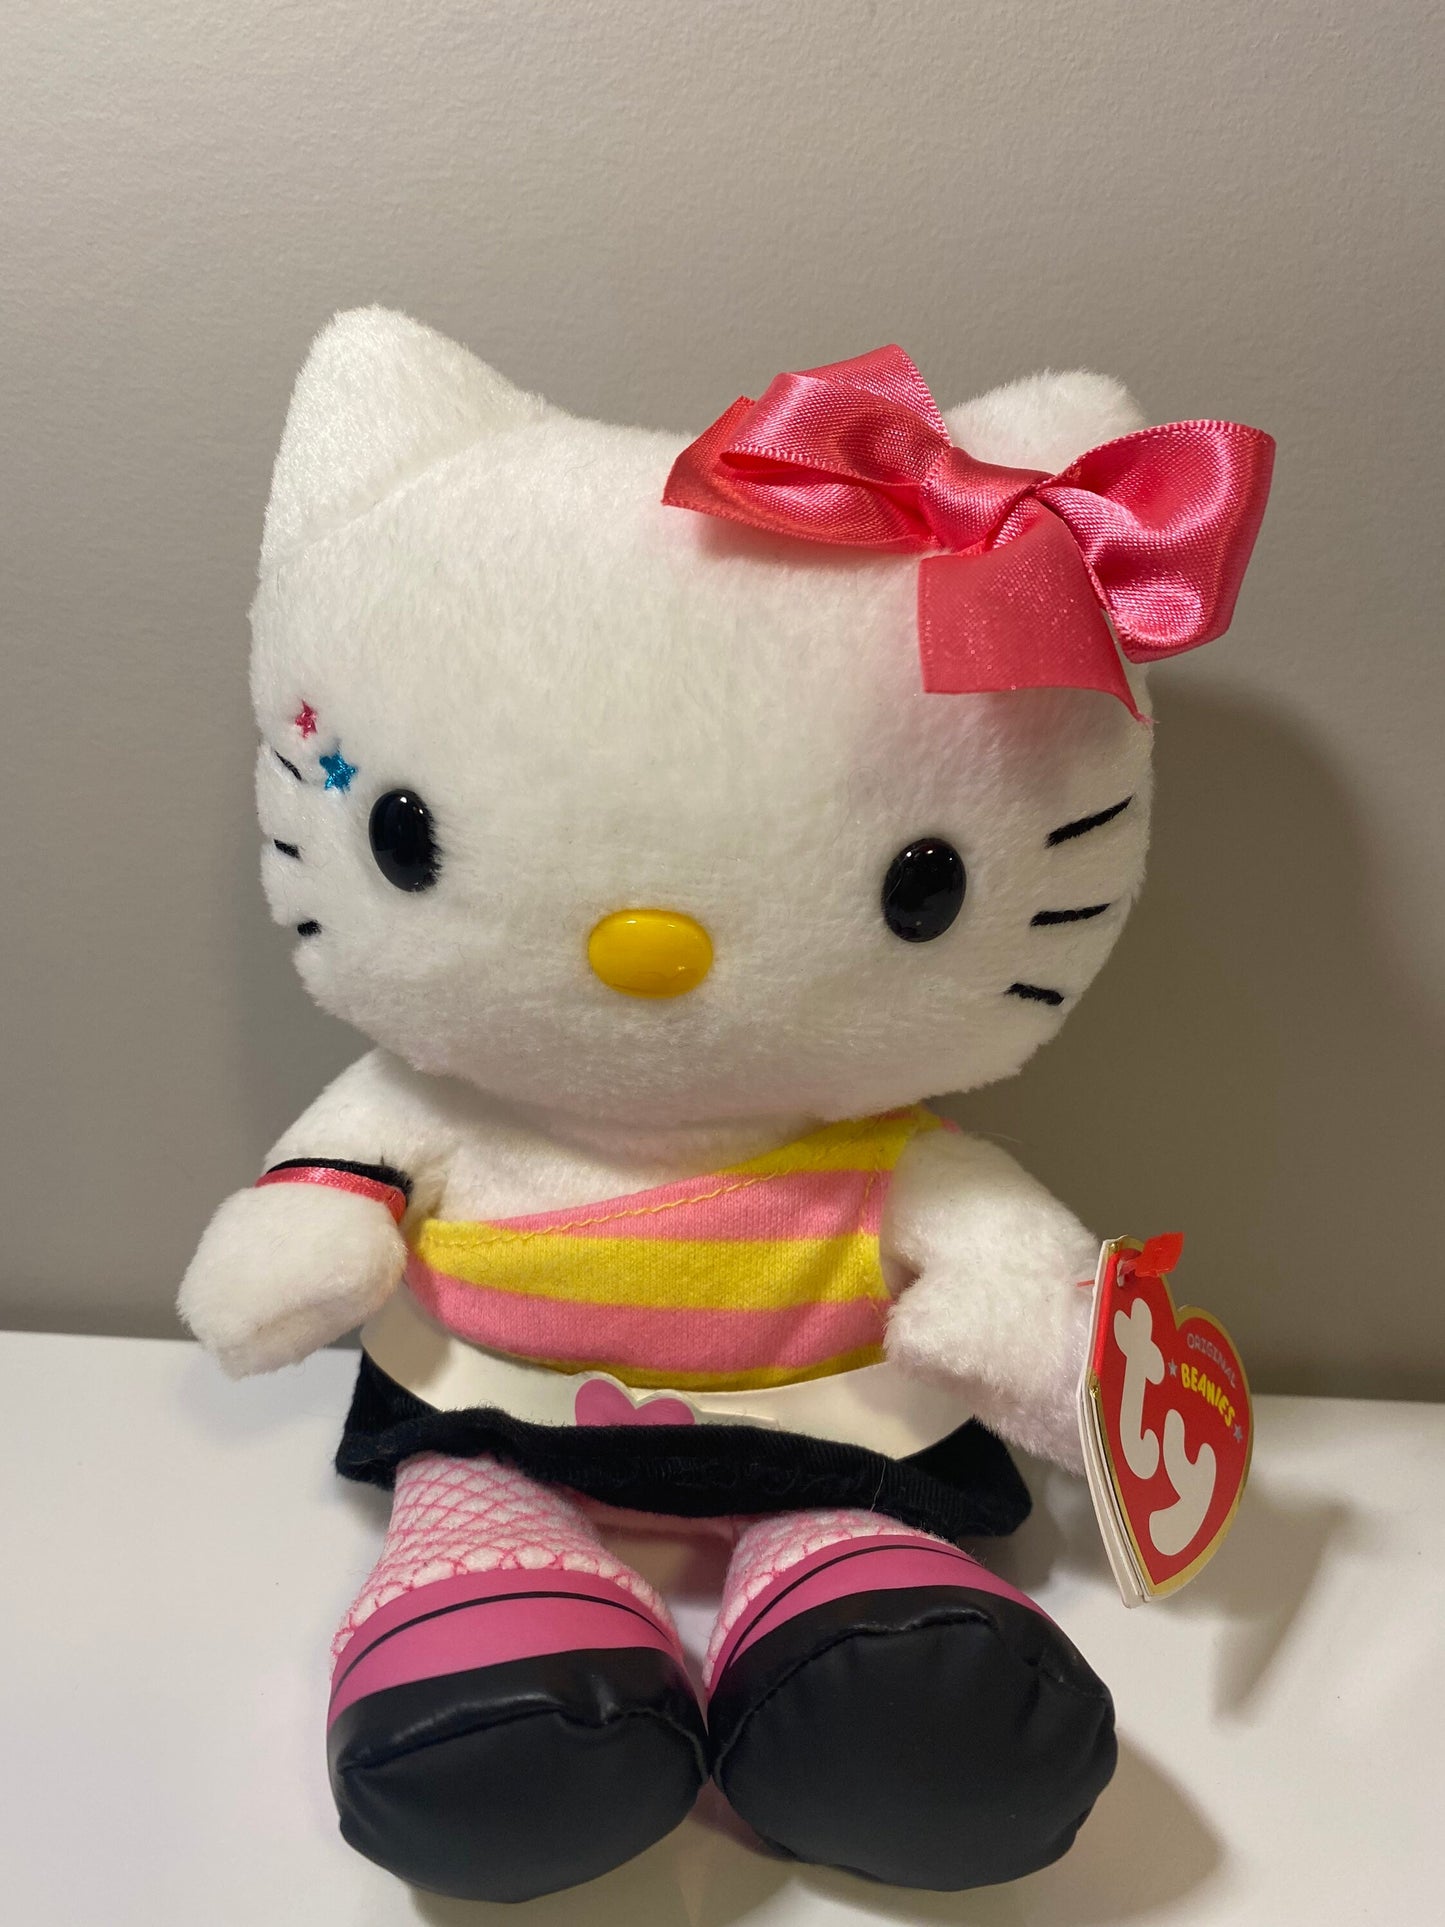 Ty Beanie Baby “Retro Hello Kitty” the Hello Kitty Plush (5.5 inch)